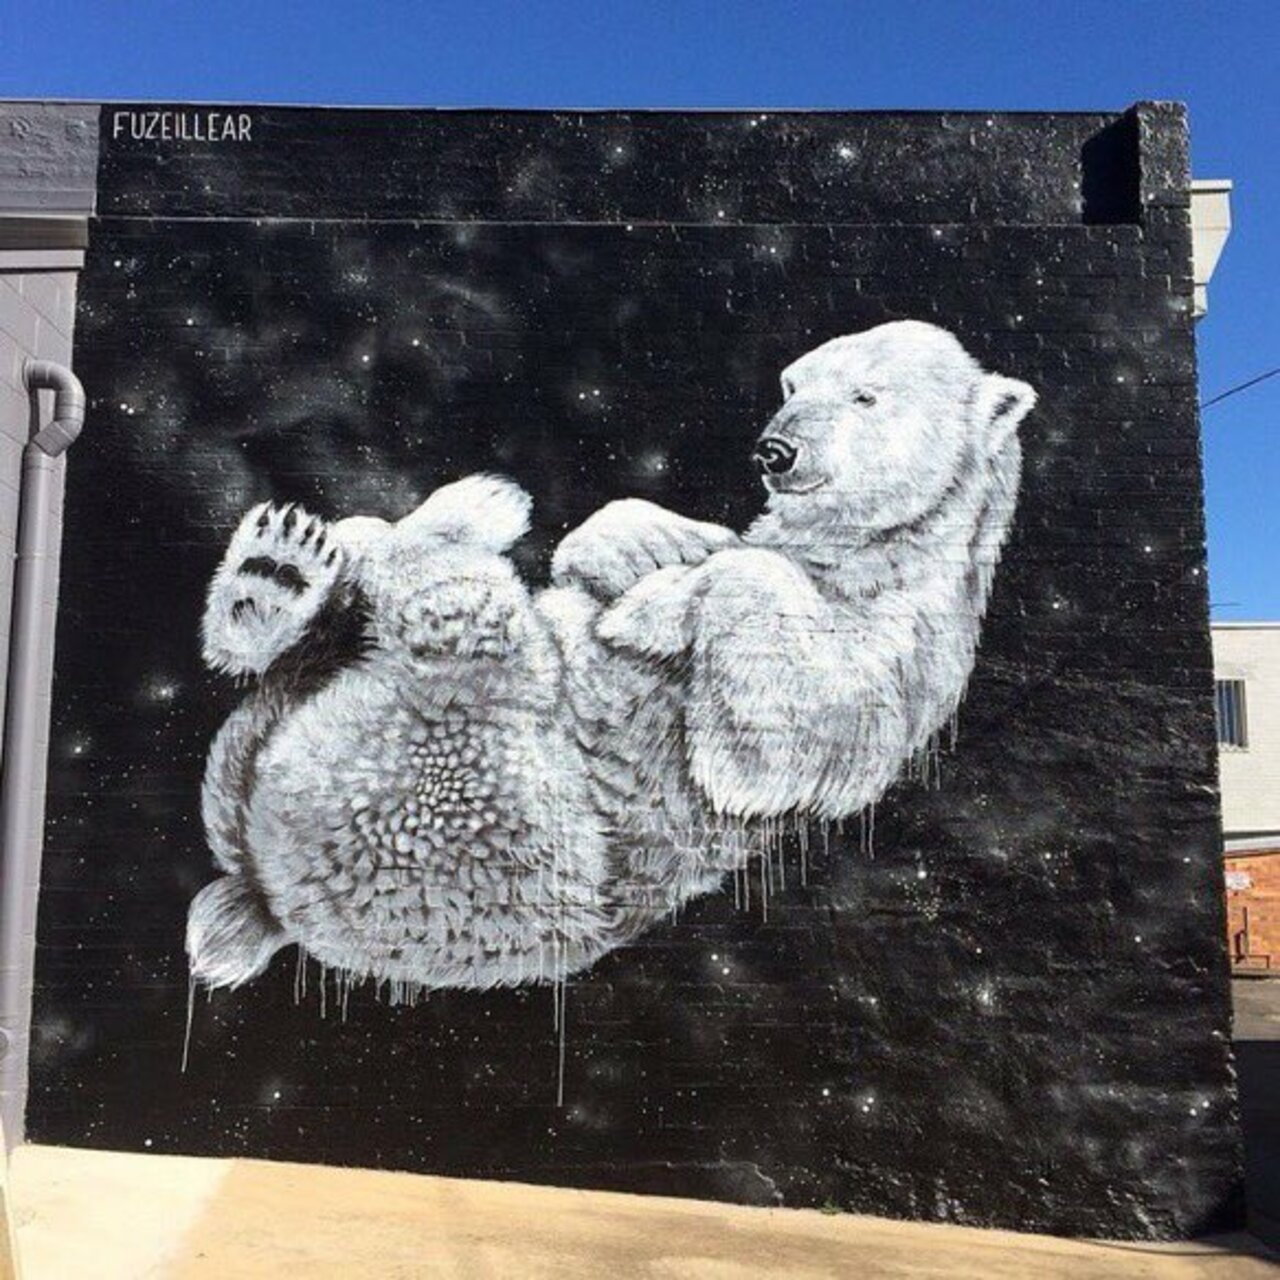 Mural by Fuzeillear, Toowoomba, Australia #Streetart #urbanart #graffiti #mural #art #Toowoomba, #Australia https://t.co/BxJ8rAePTU